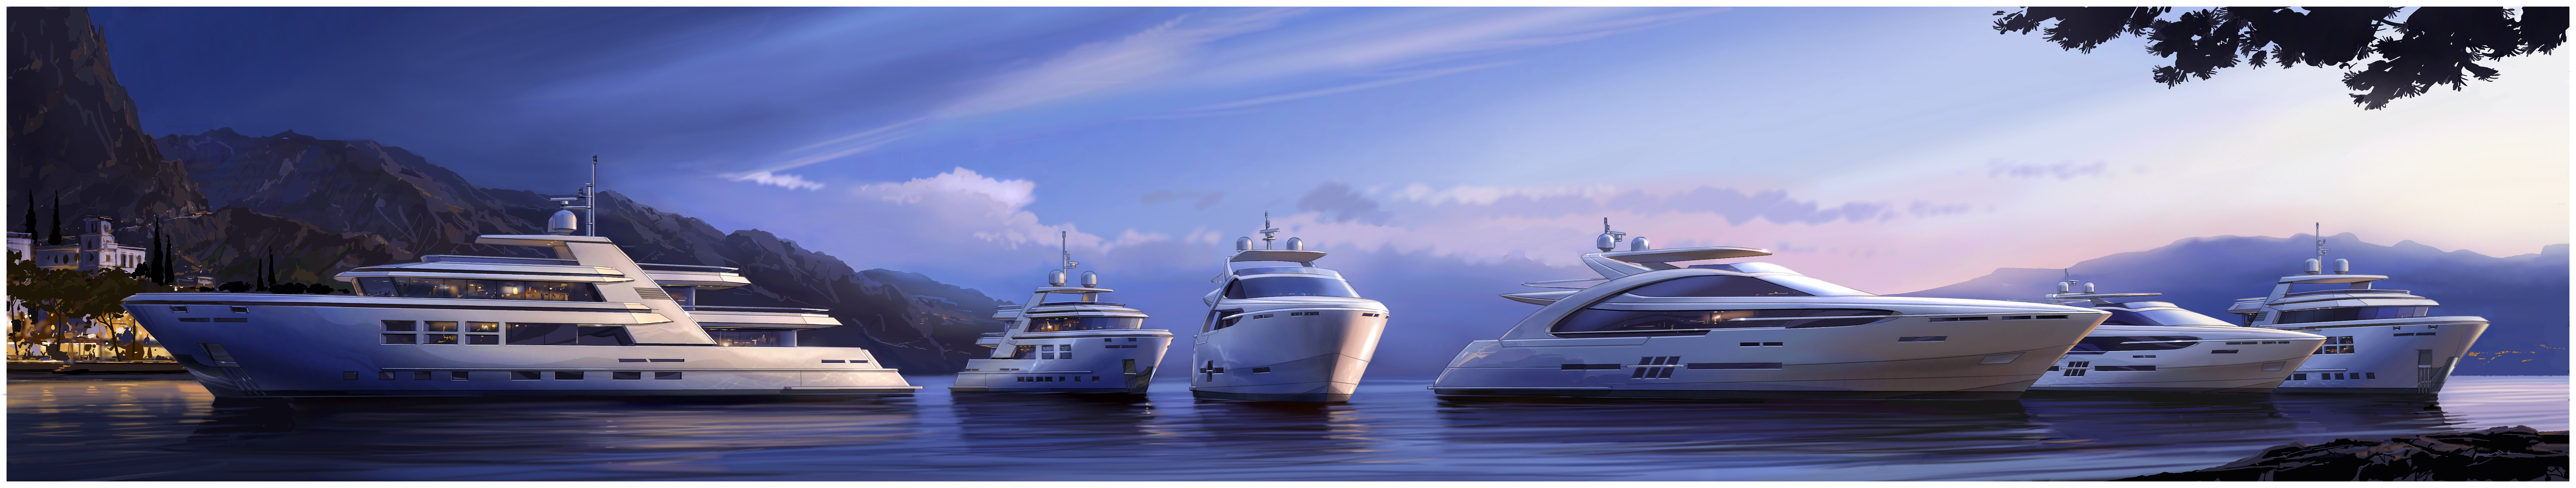 drettmann yachts for sale